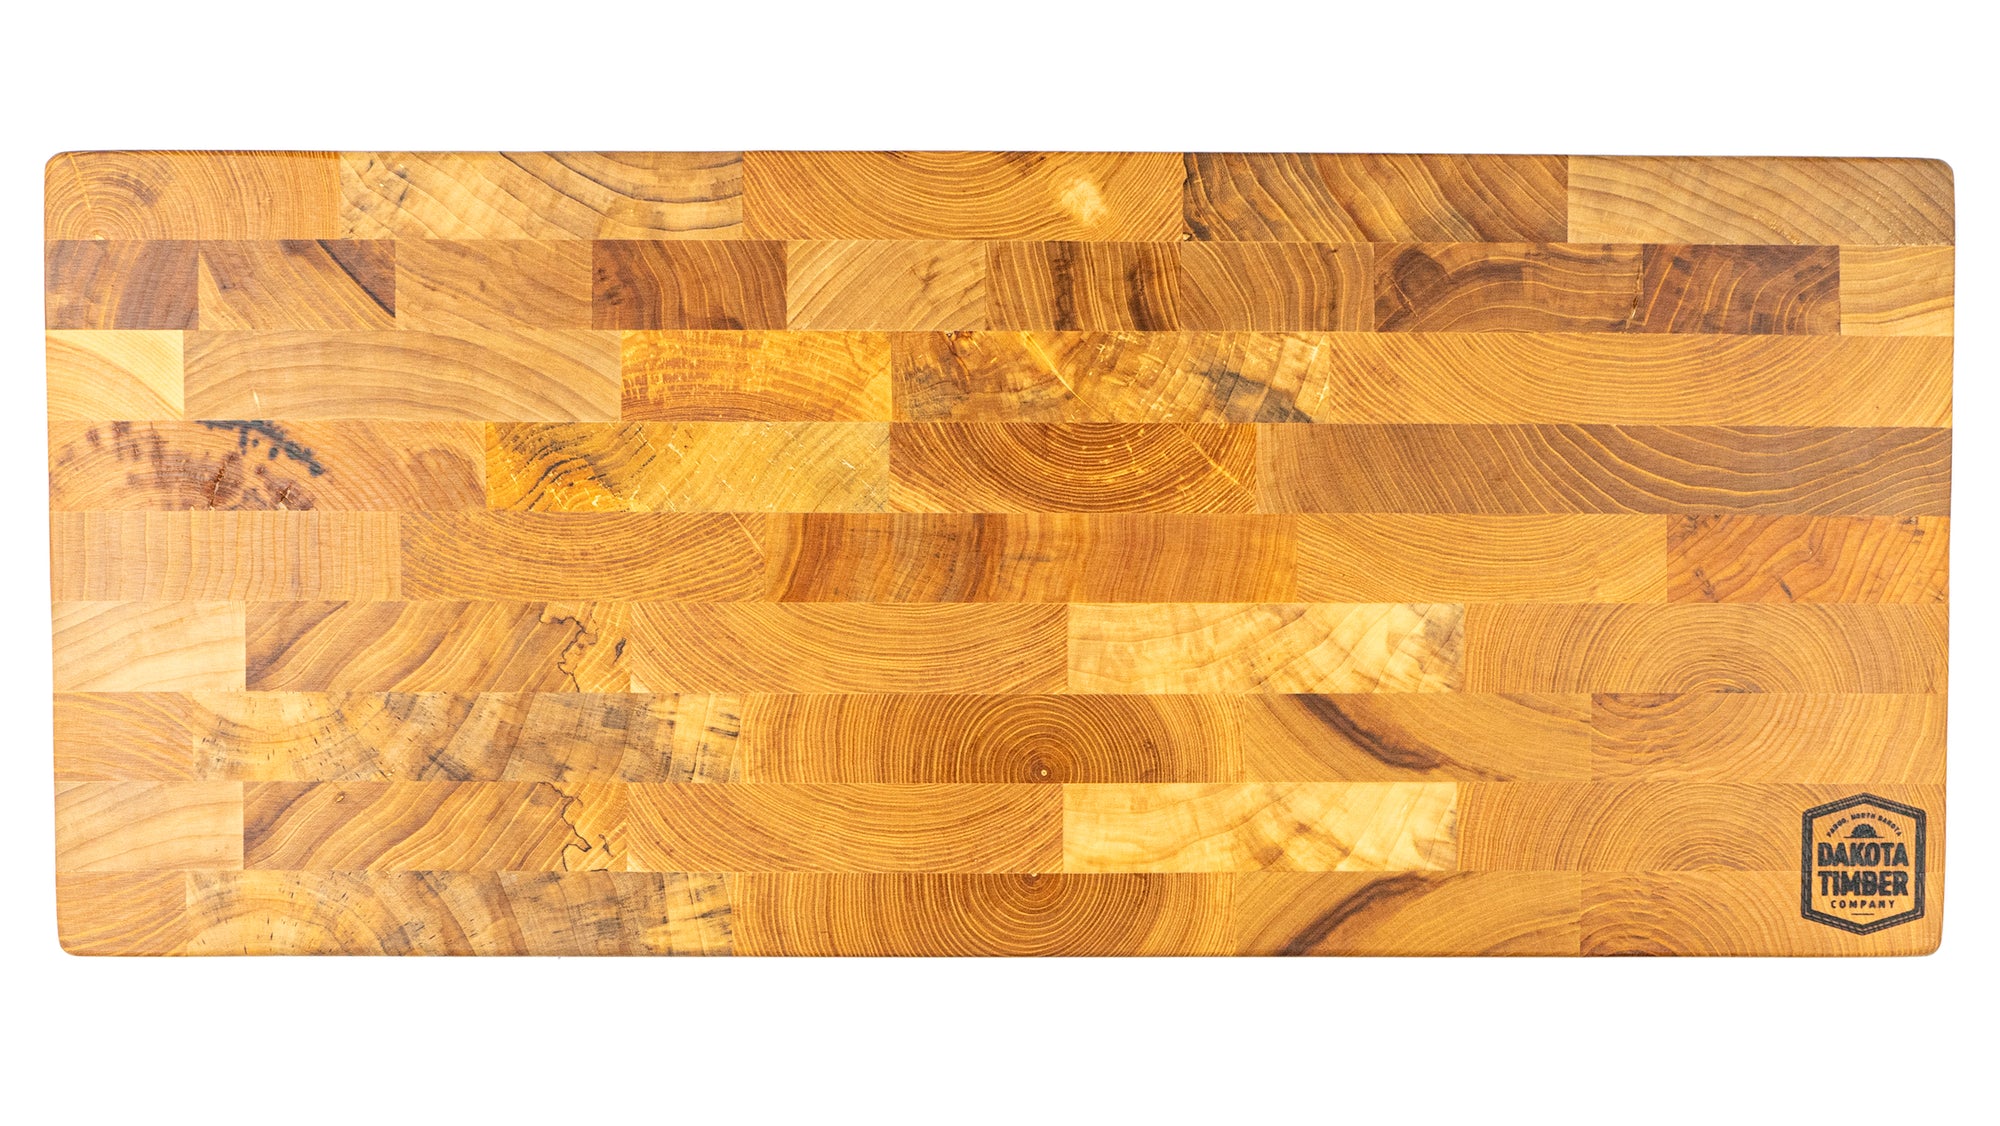 11.5" x 26.5" x 2.25" End Grain Cutting Board - Dakota Timber Co